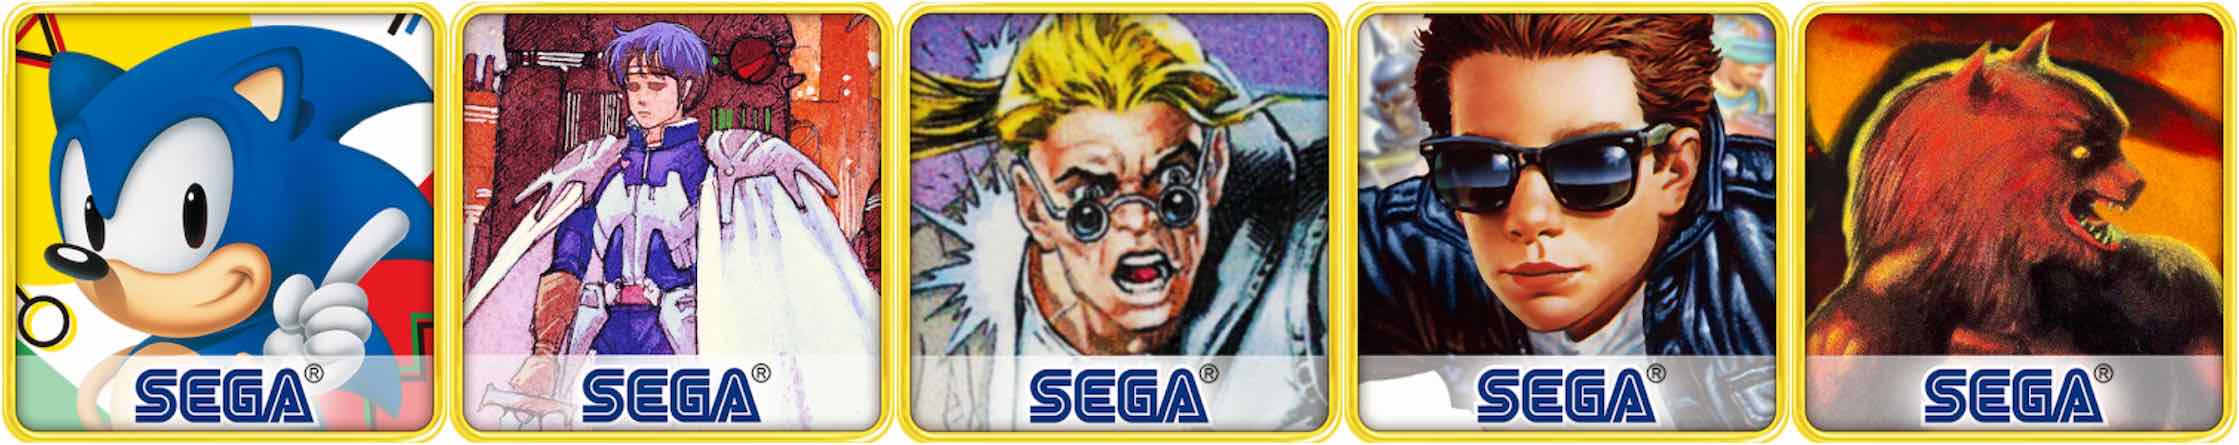 Sega Forever Wave One